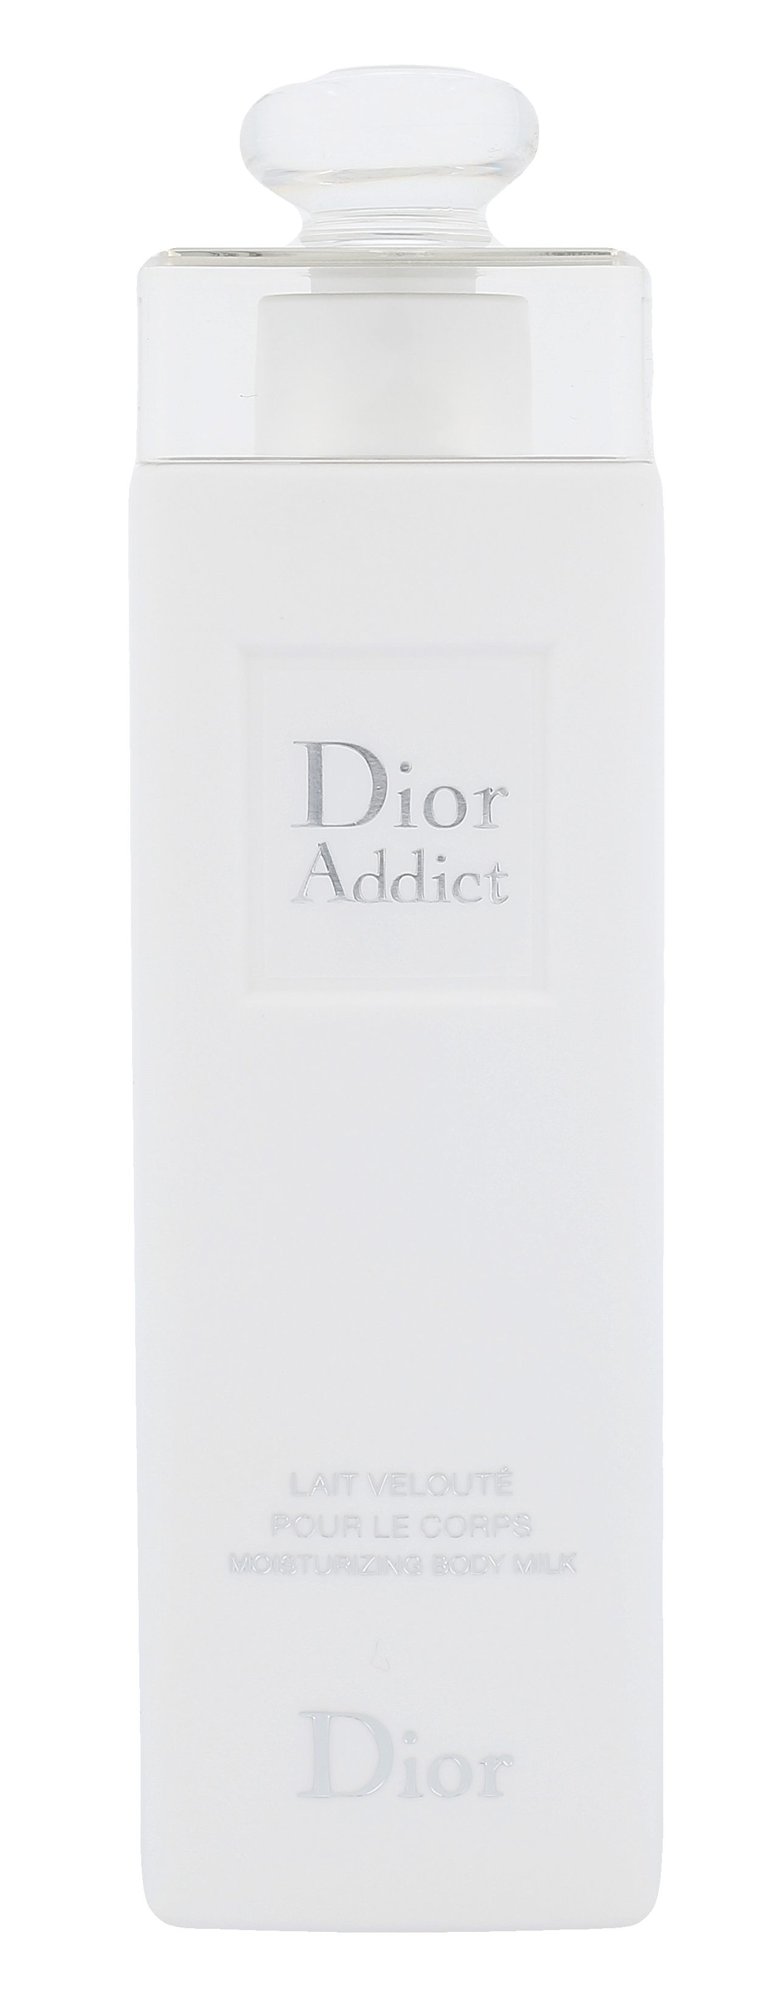 Christian Dior Addict 200ml kūno losjonas Testeris